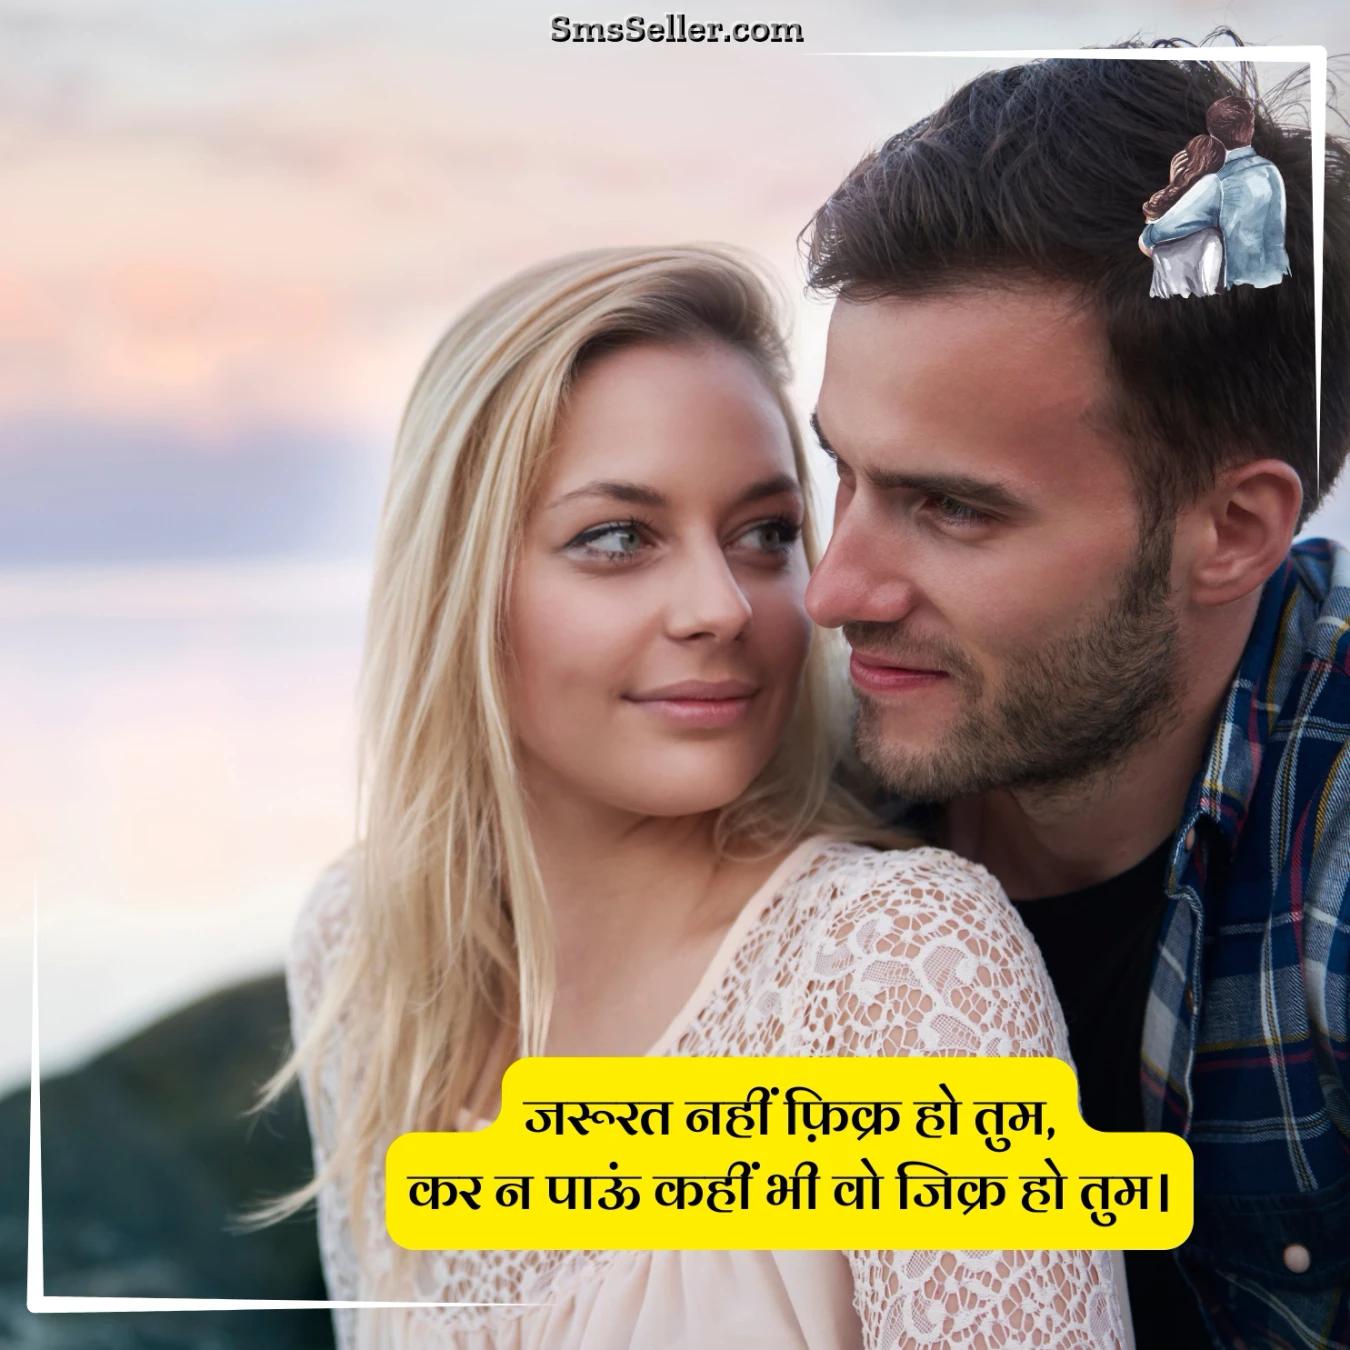 true love quotes in hindi jarurat nahin fikr tum